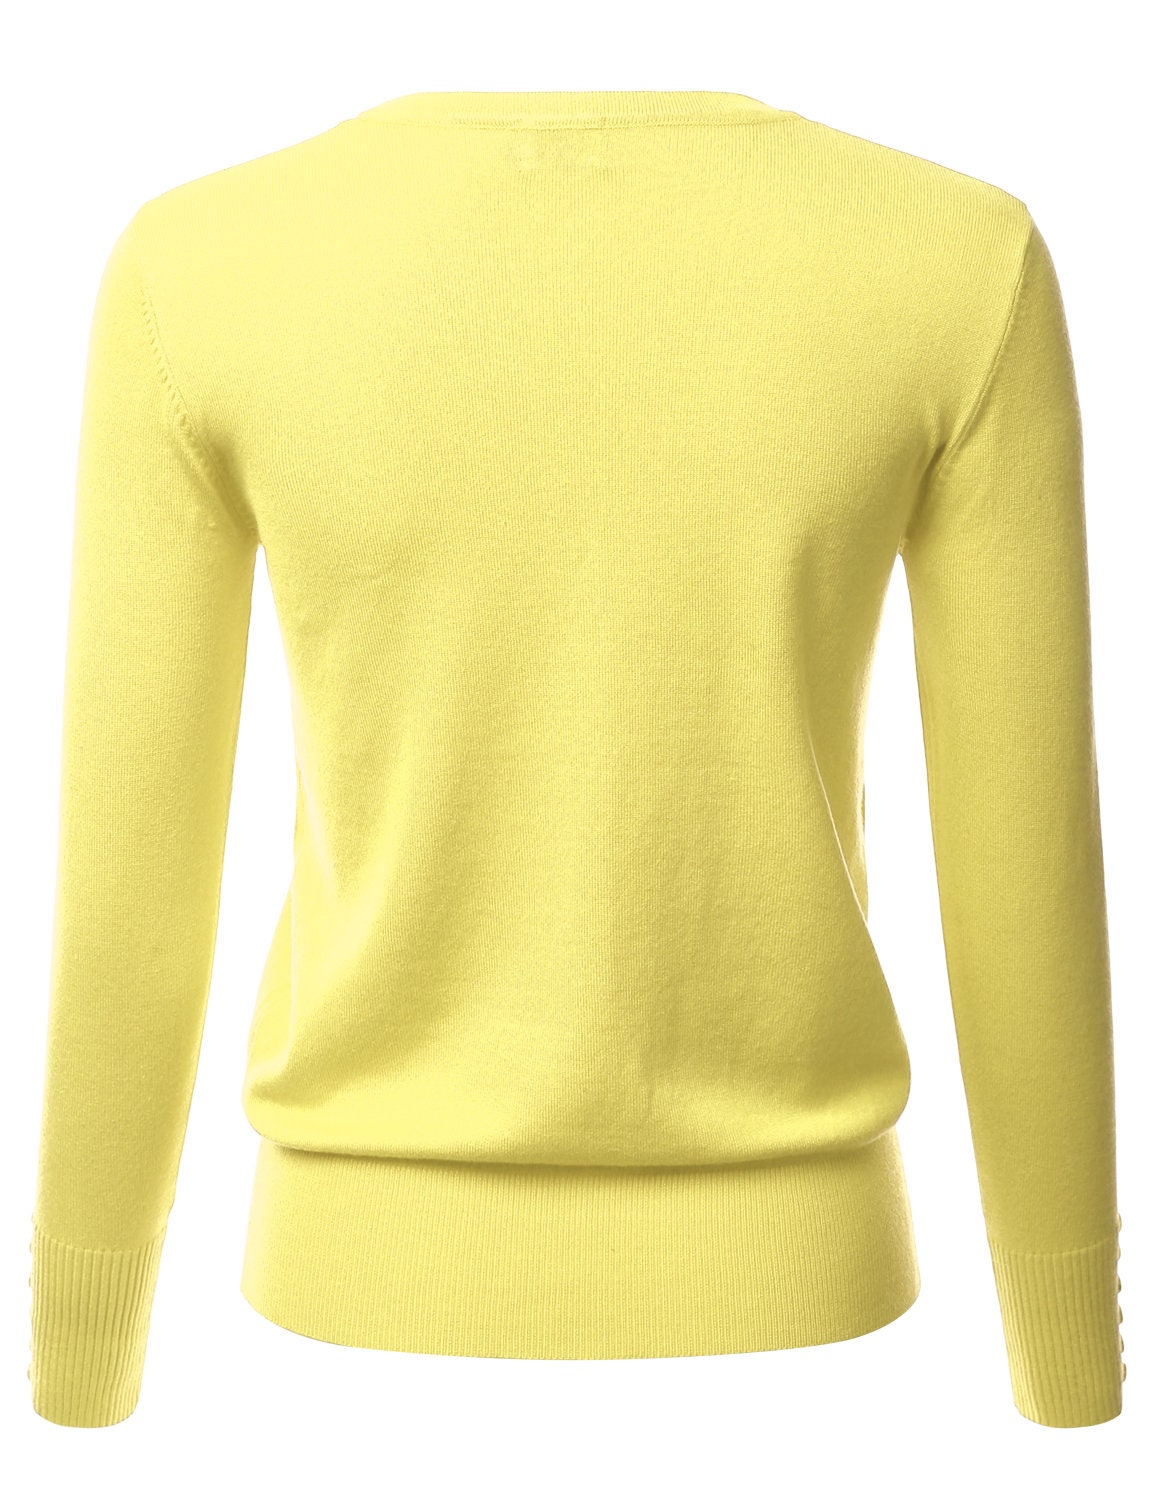 DANIBE Women's V-neck Long Sleeve Button Down Sweater - Etsy